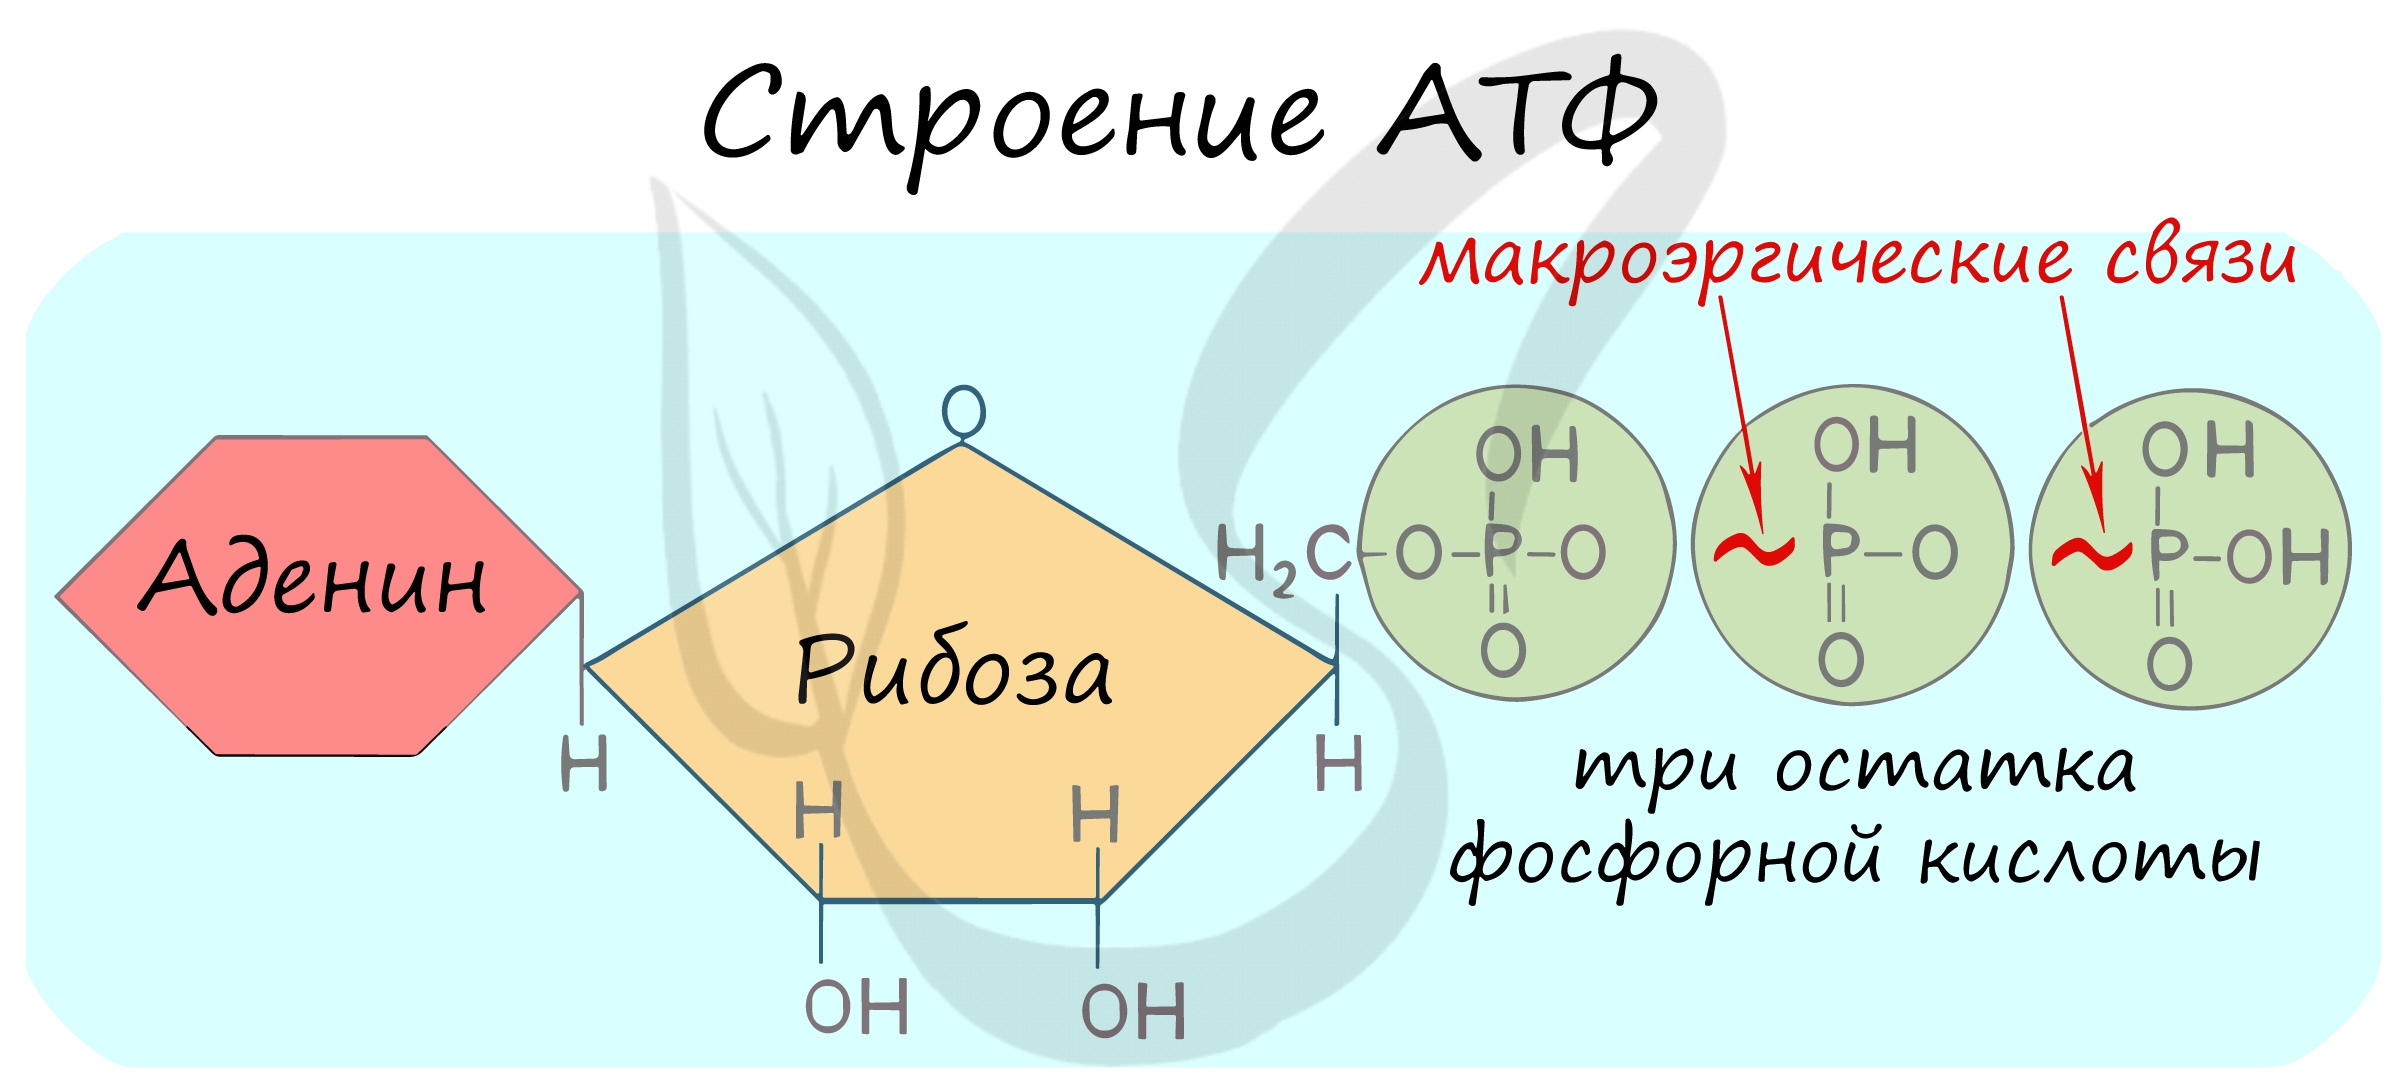 Макроэргические связи в молекуле атф. Формула АТФ С макроэргическими связями. Макроэргическое соединение АТФ. Гидролиз макроэргических связей молекулы АТФ.